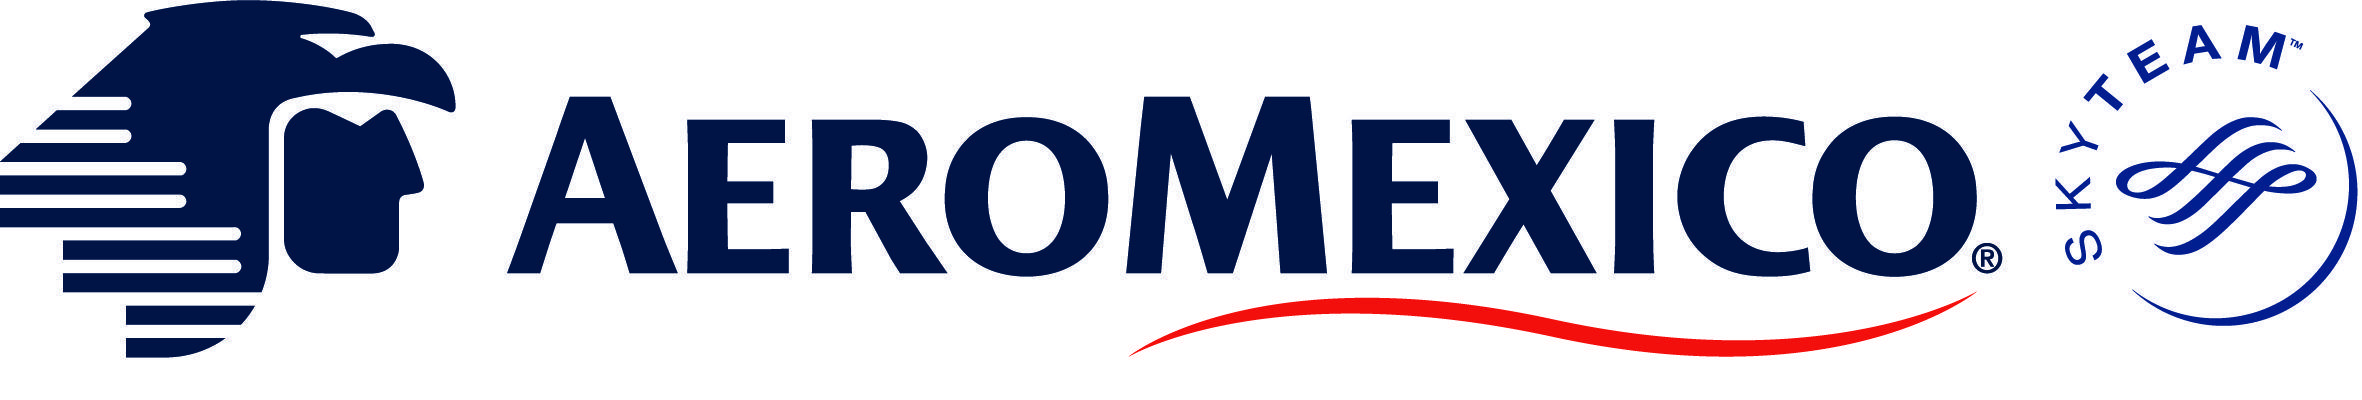 Aeromexico Logo - Aeromexico Logo PNG Transparent Aeromexico Logo PNG Image